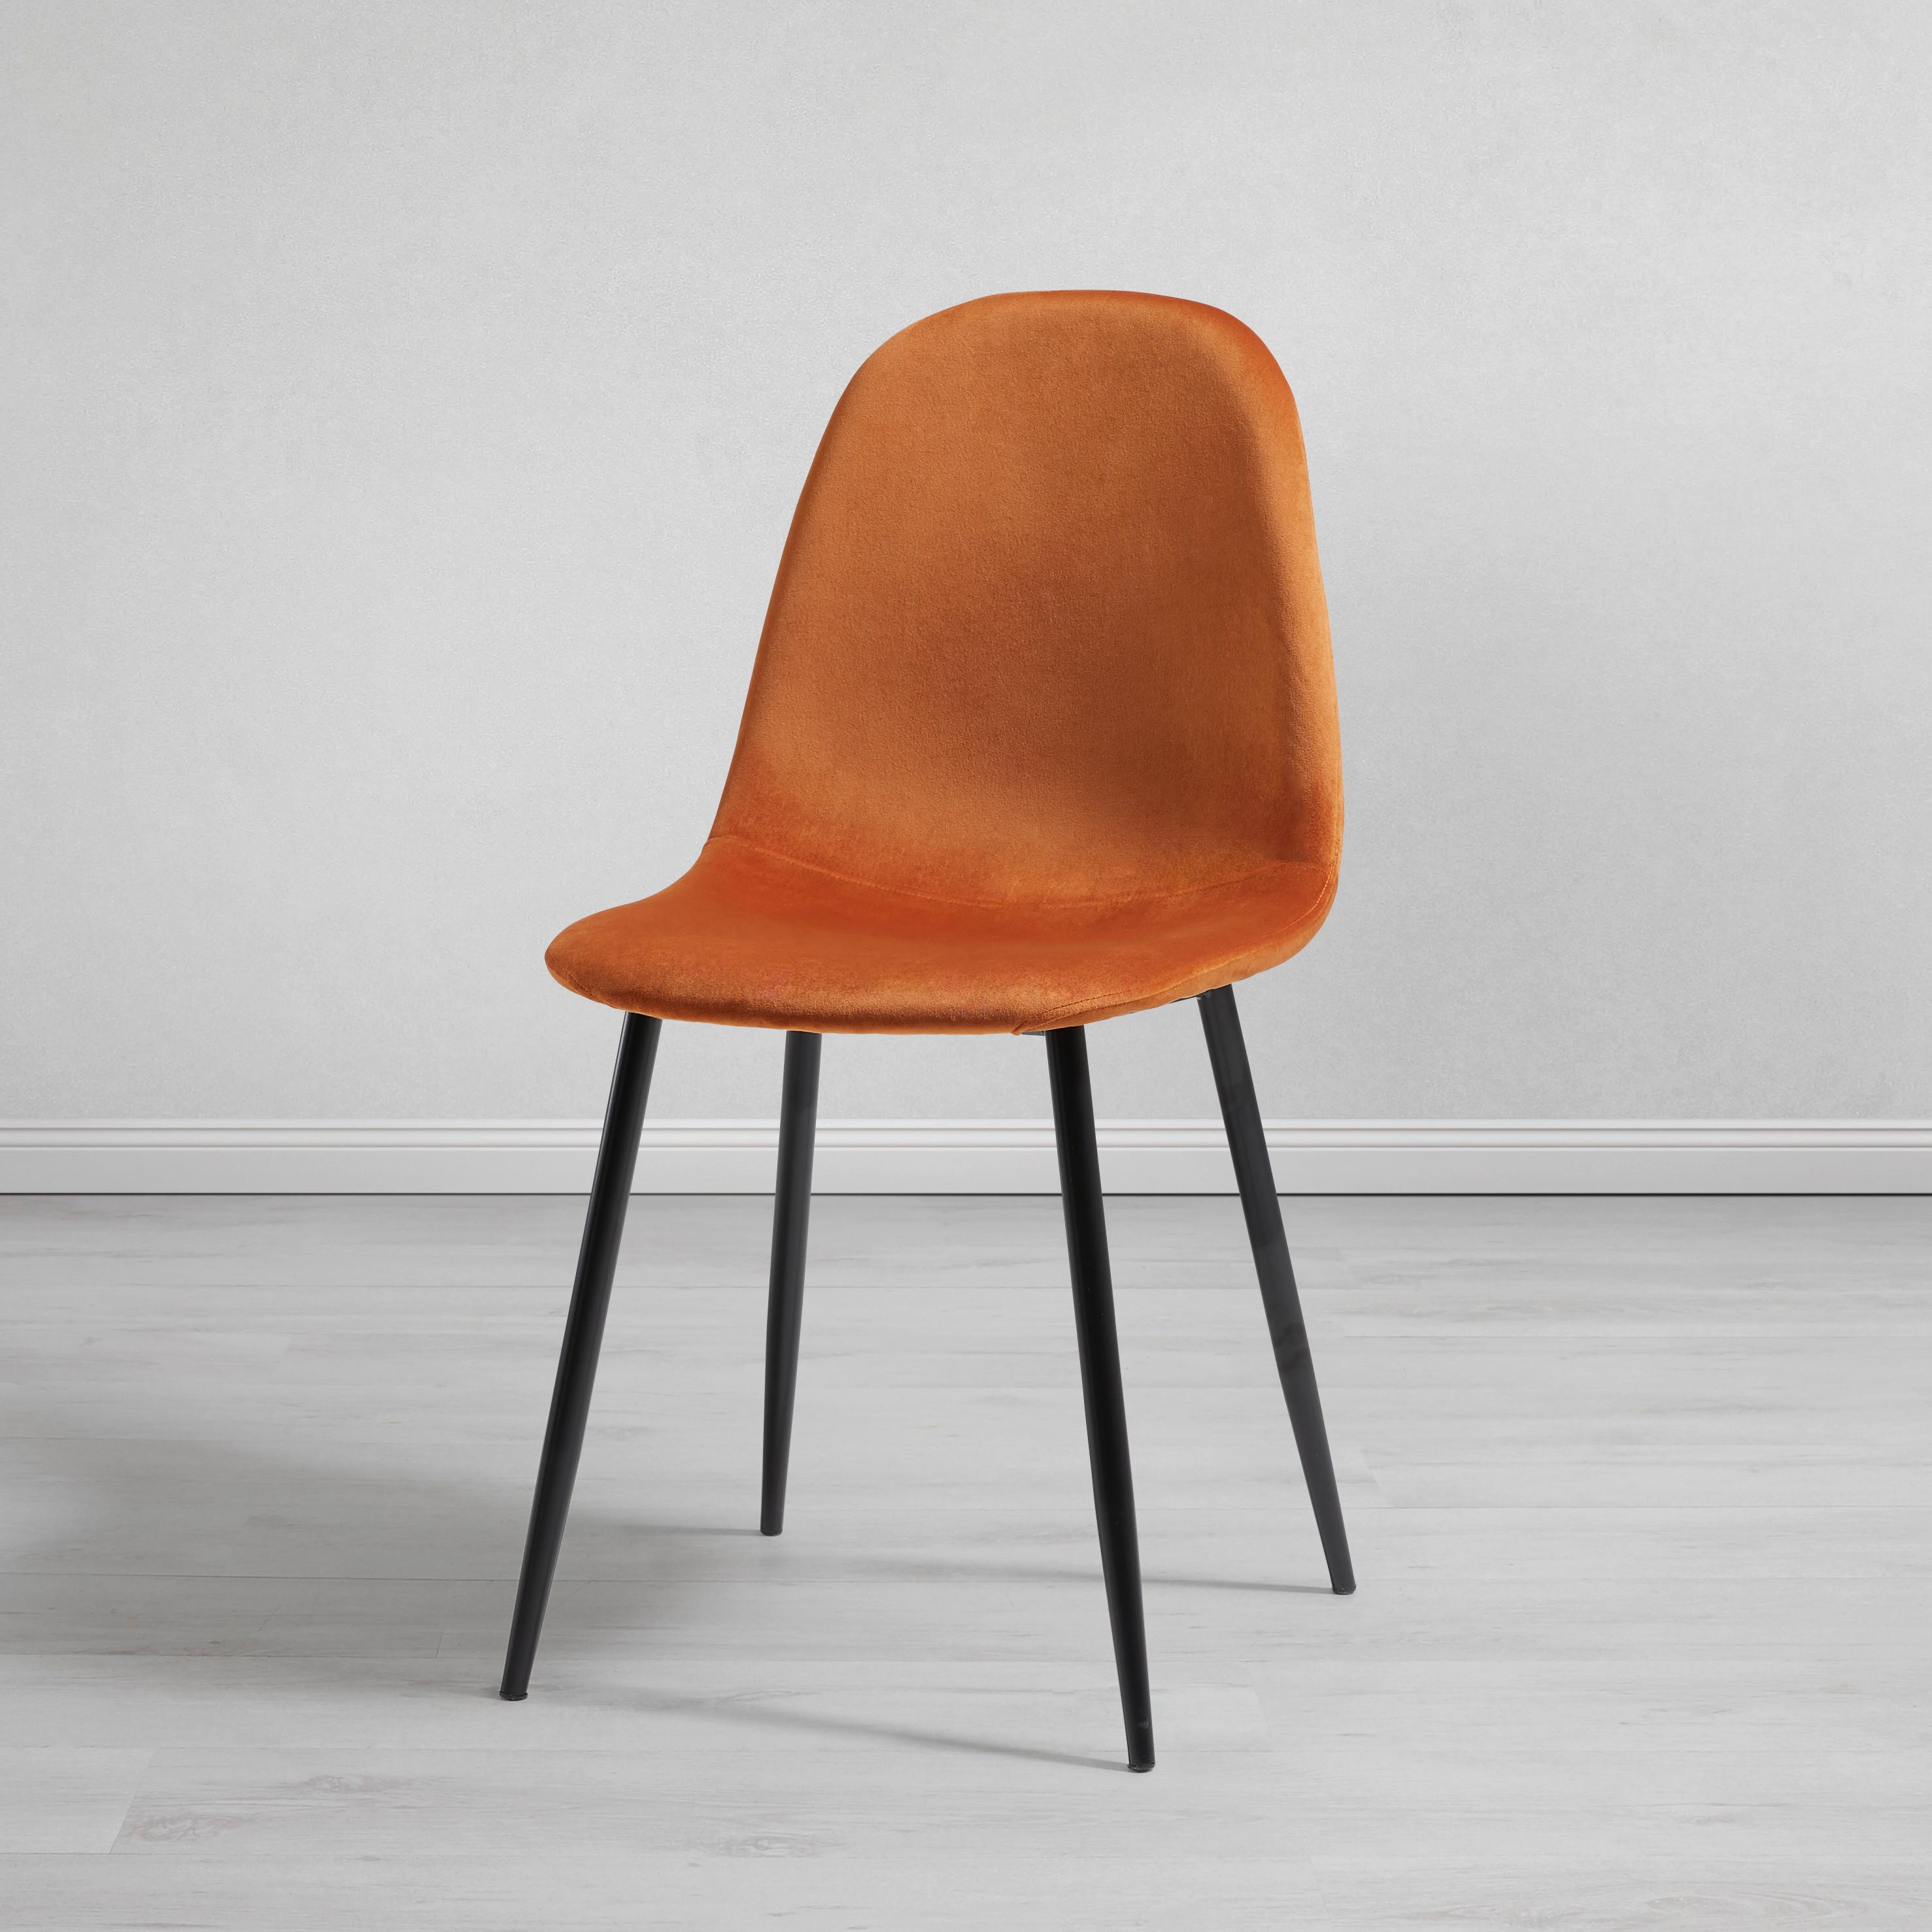 Židle Lio - černá/rezavá, Moderní, kov/dřevo (43/86/55cm) - Modern Living